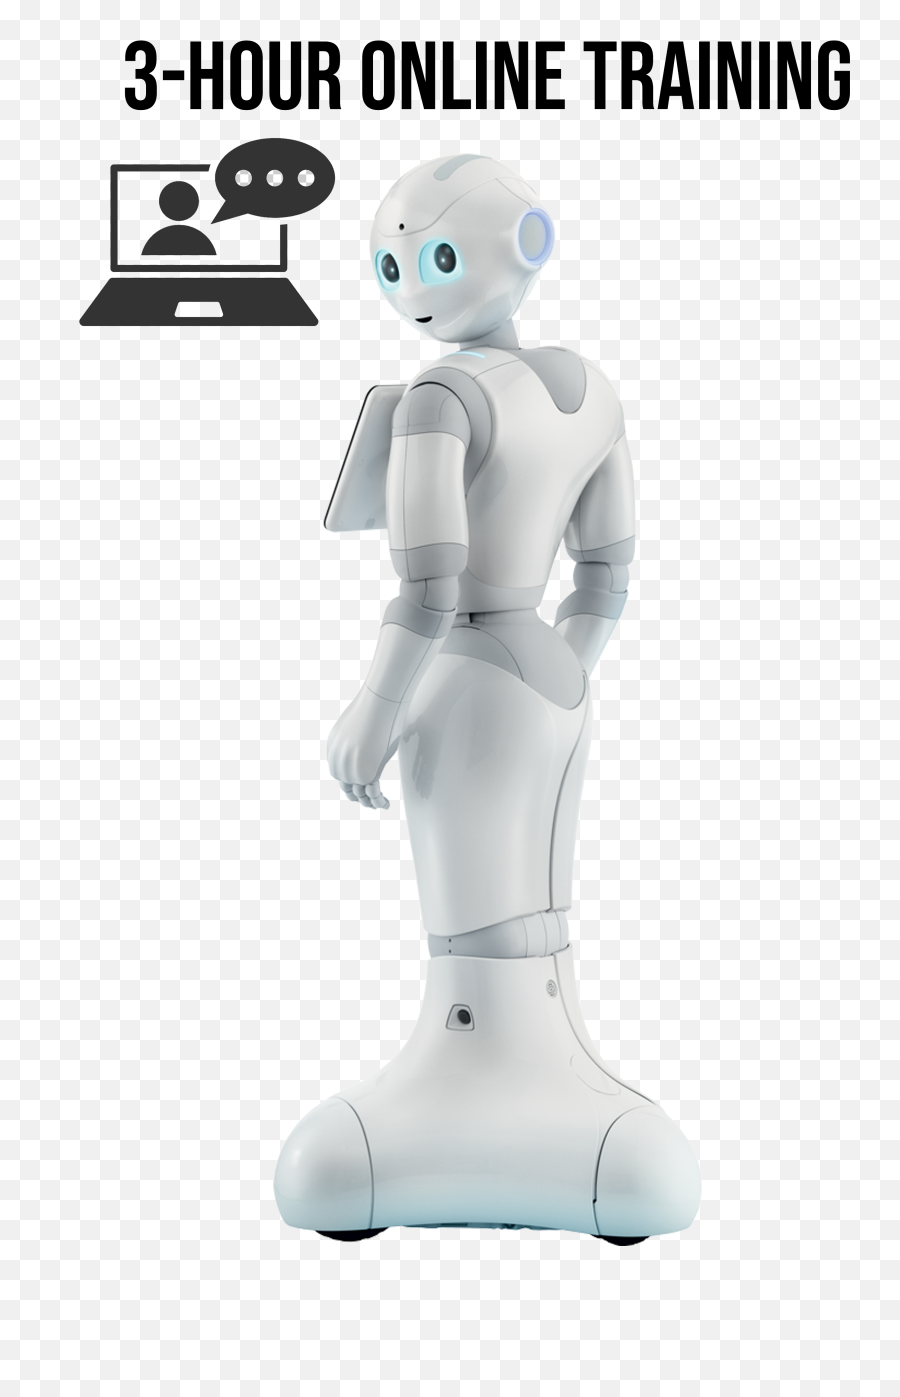 Pepper Robot Online Training - Pepper Robot Emoji,Robots With Emotions